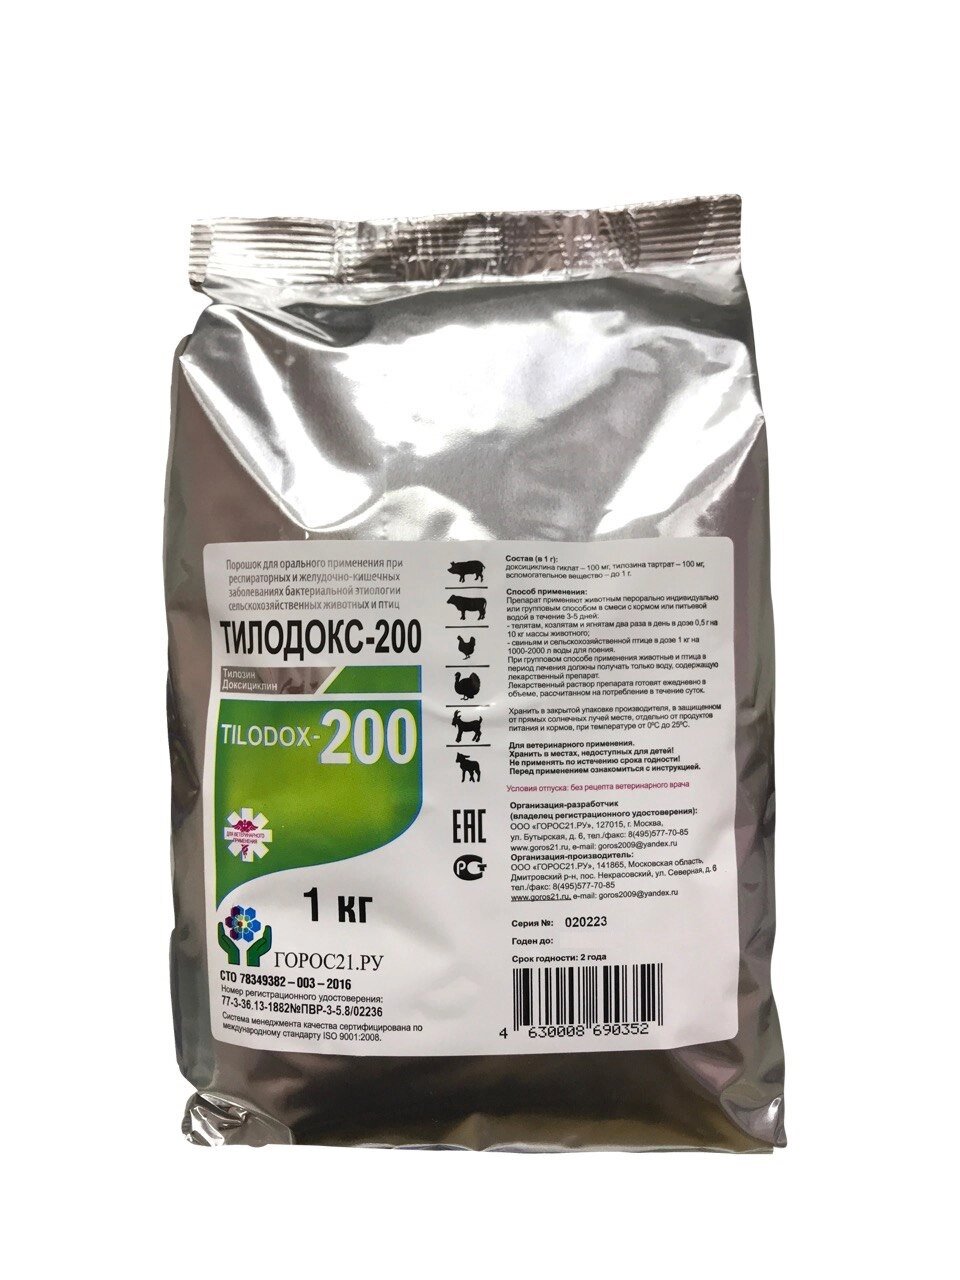 Антибиотик Тилодокс-200 1кг порошок от компании ООО "ВЕТАГРОСНАБ" - фото 1